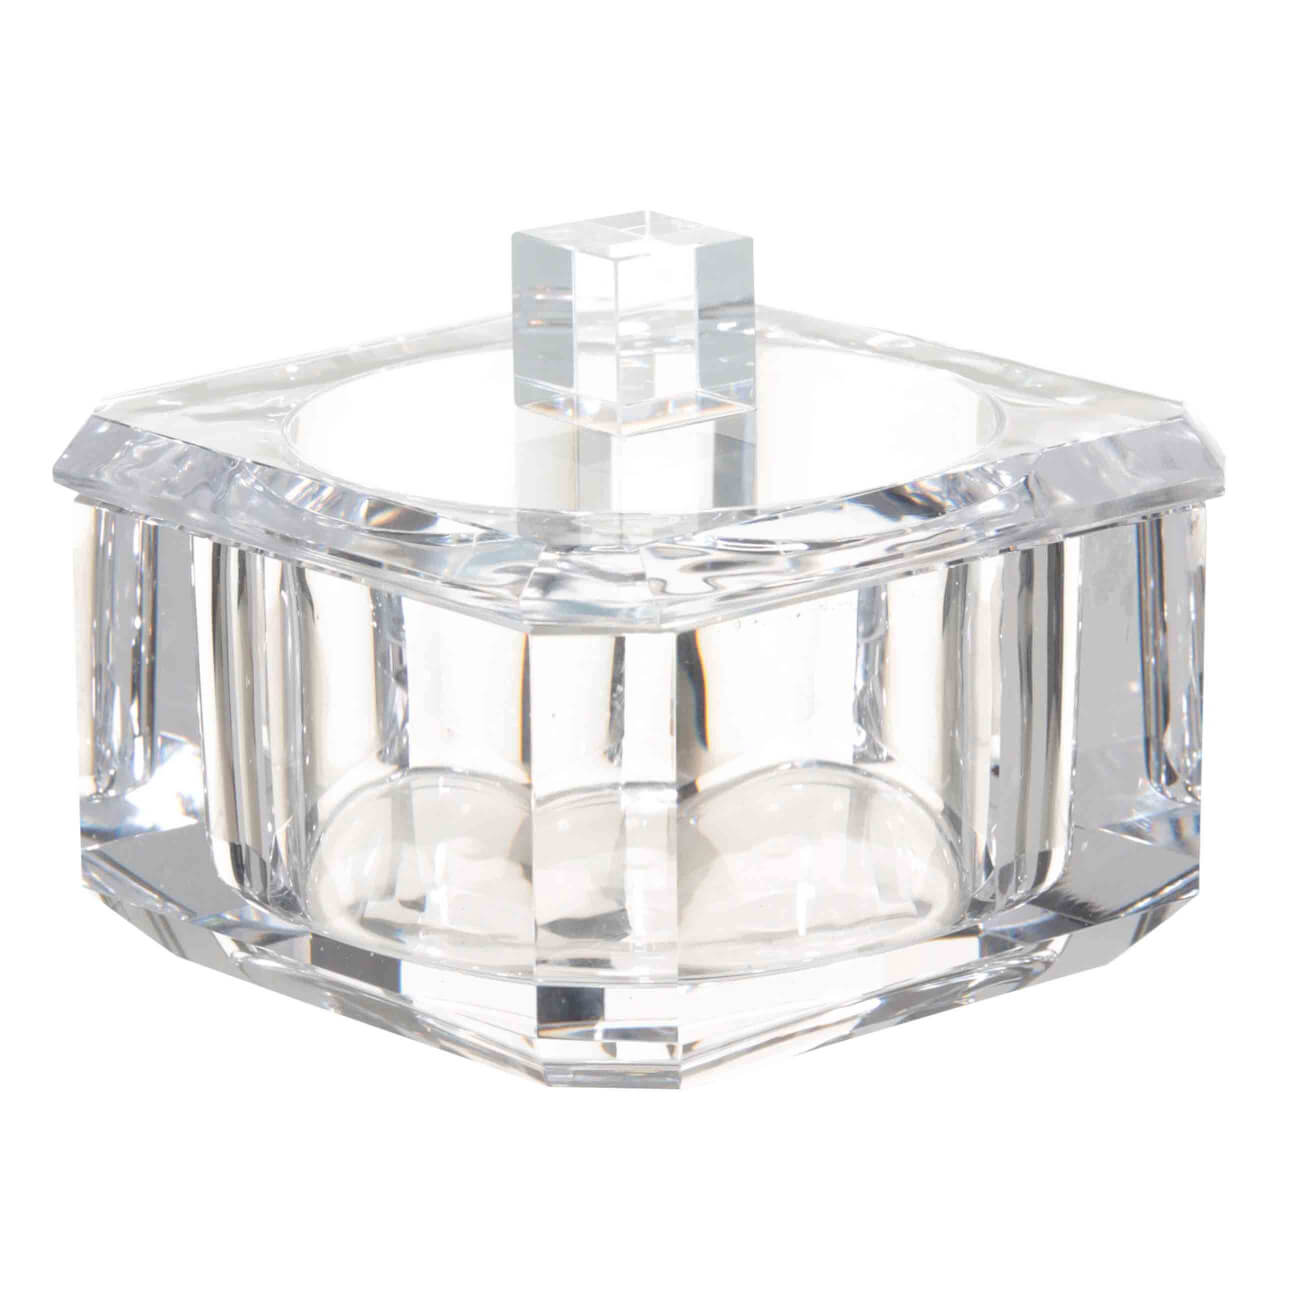 Шкатулка для ванной, 10х10 см, стекло, квадратная, Грани, Shower Crystal Glance шкатулка